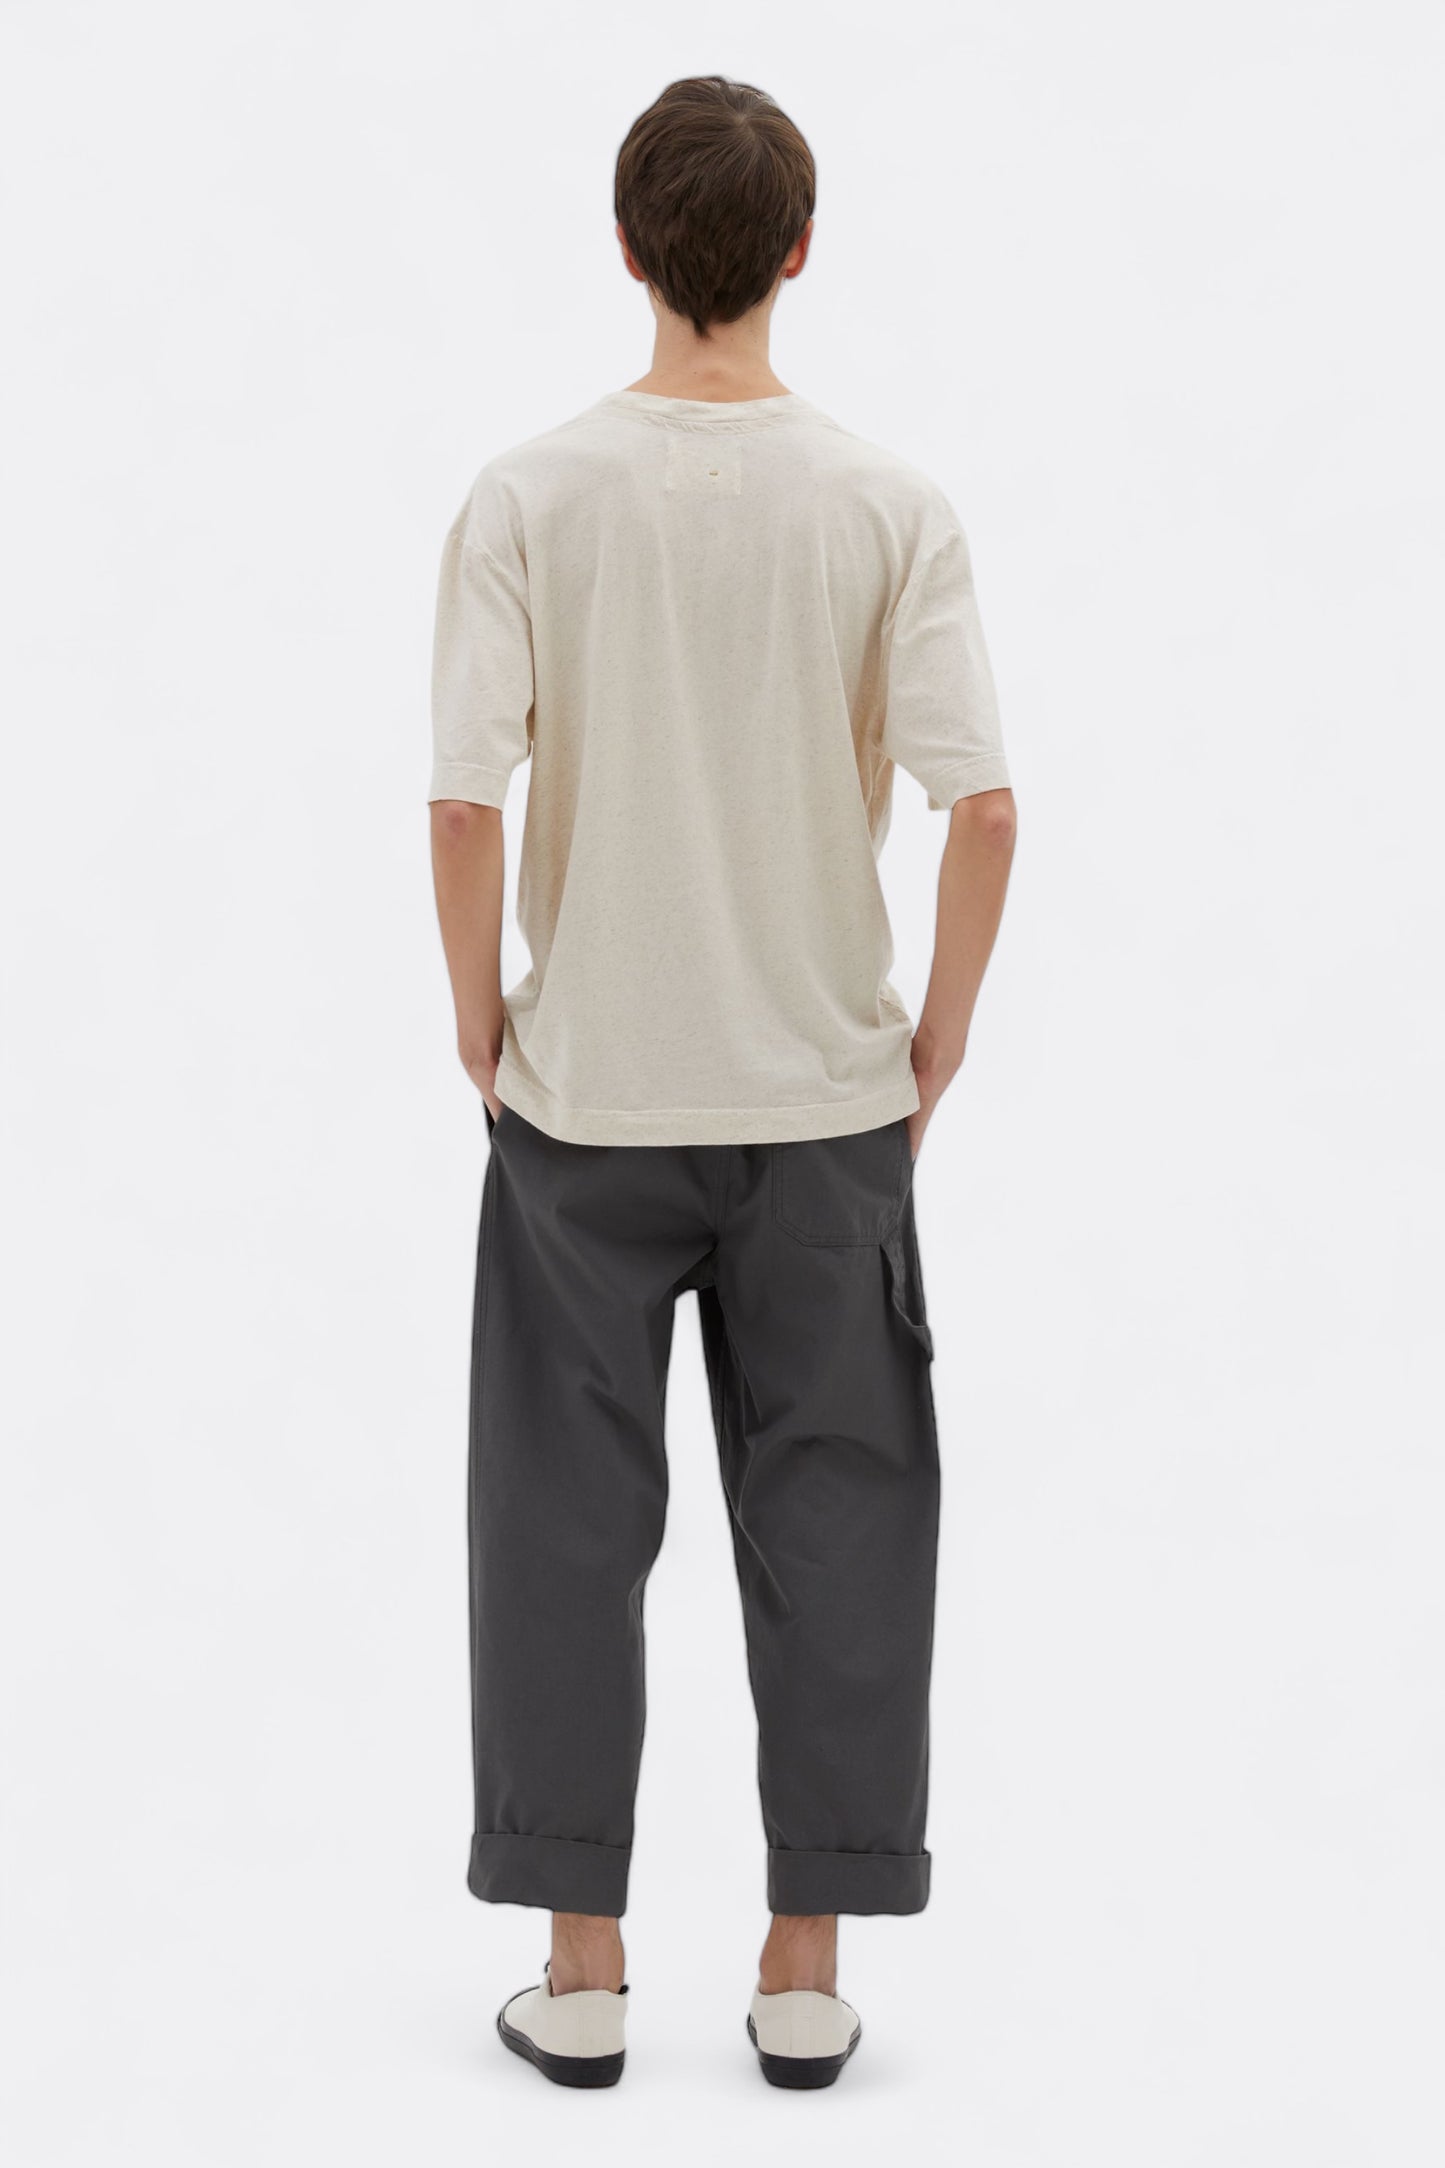 Margaret Howell - MHL. Simple T-Shirt Cotton Linen Jersey (Natural)